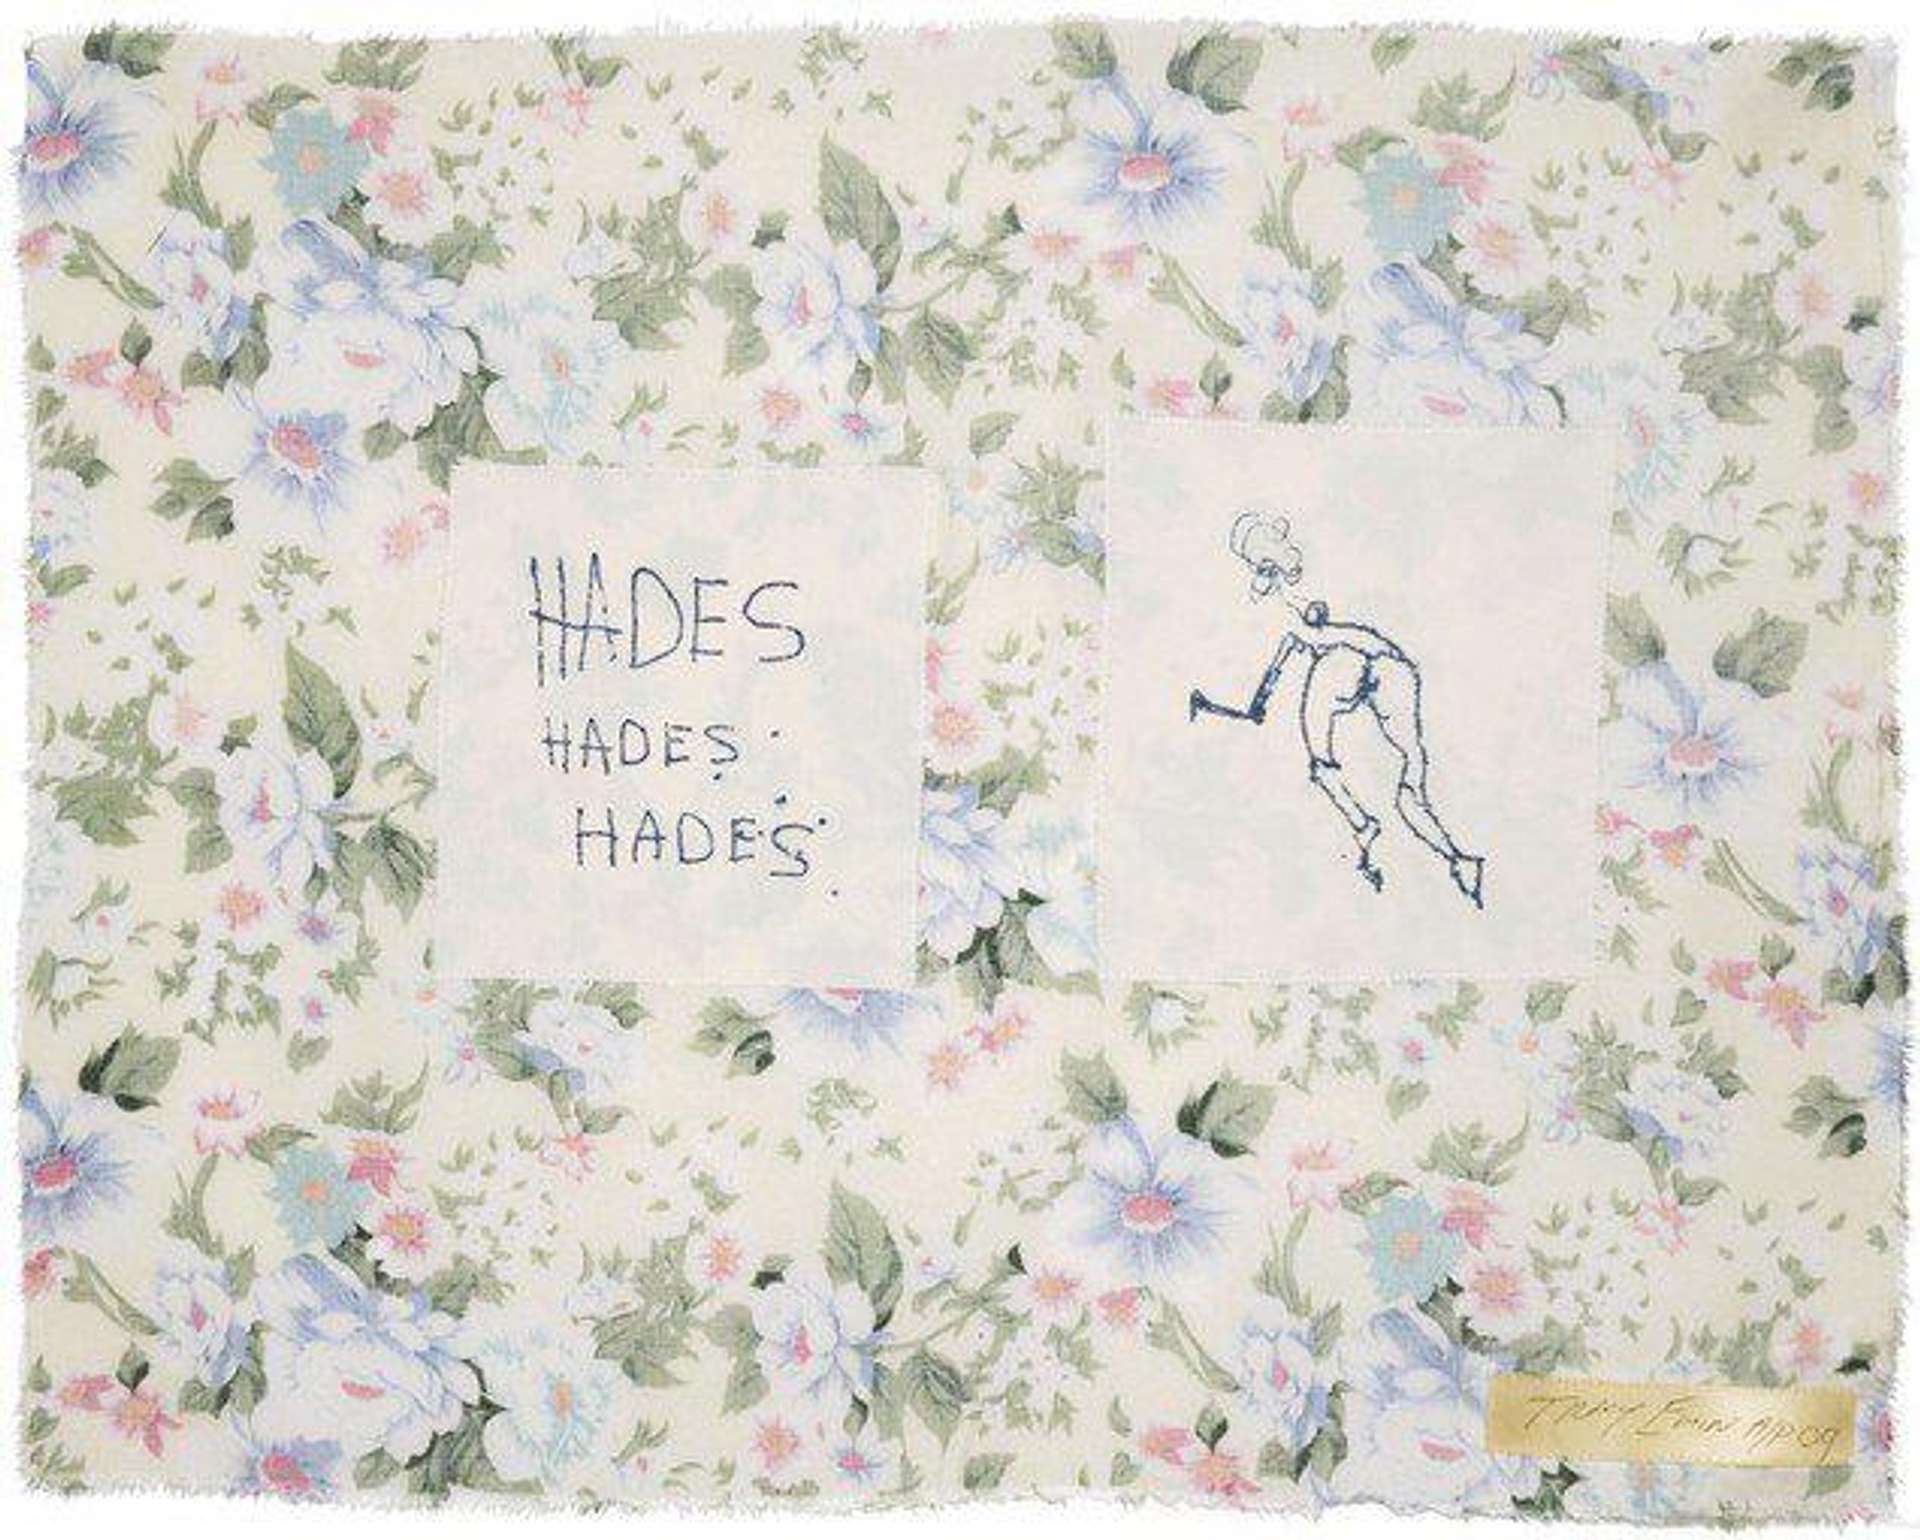 Hades, Hades, Hades by Tracey Emin